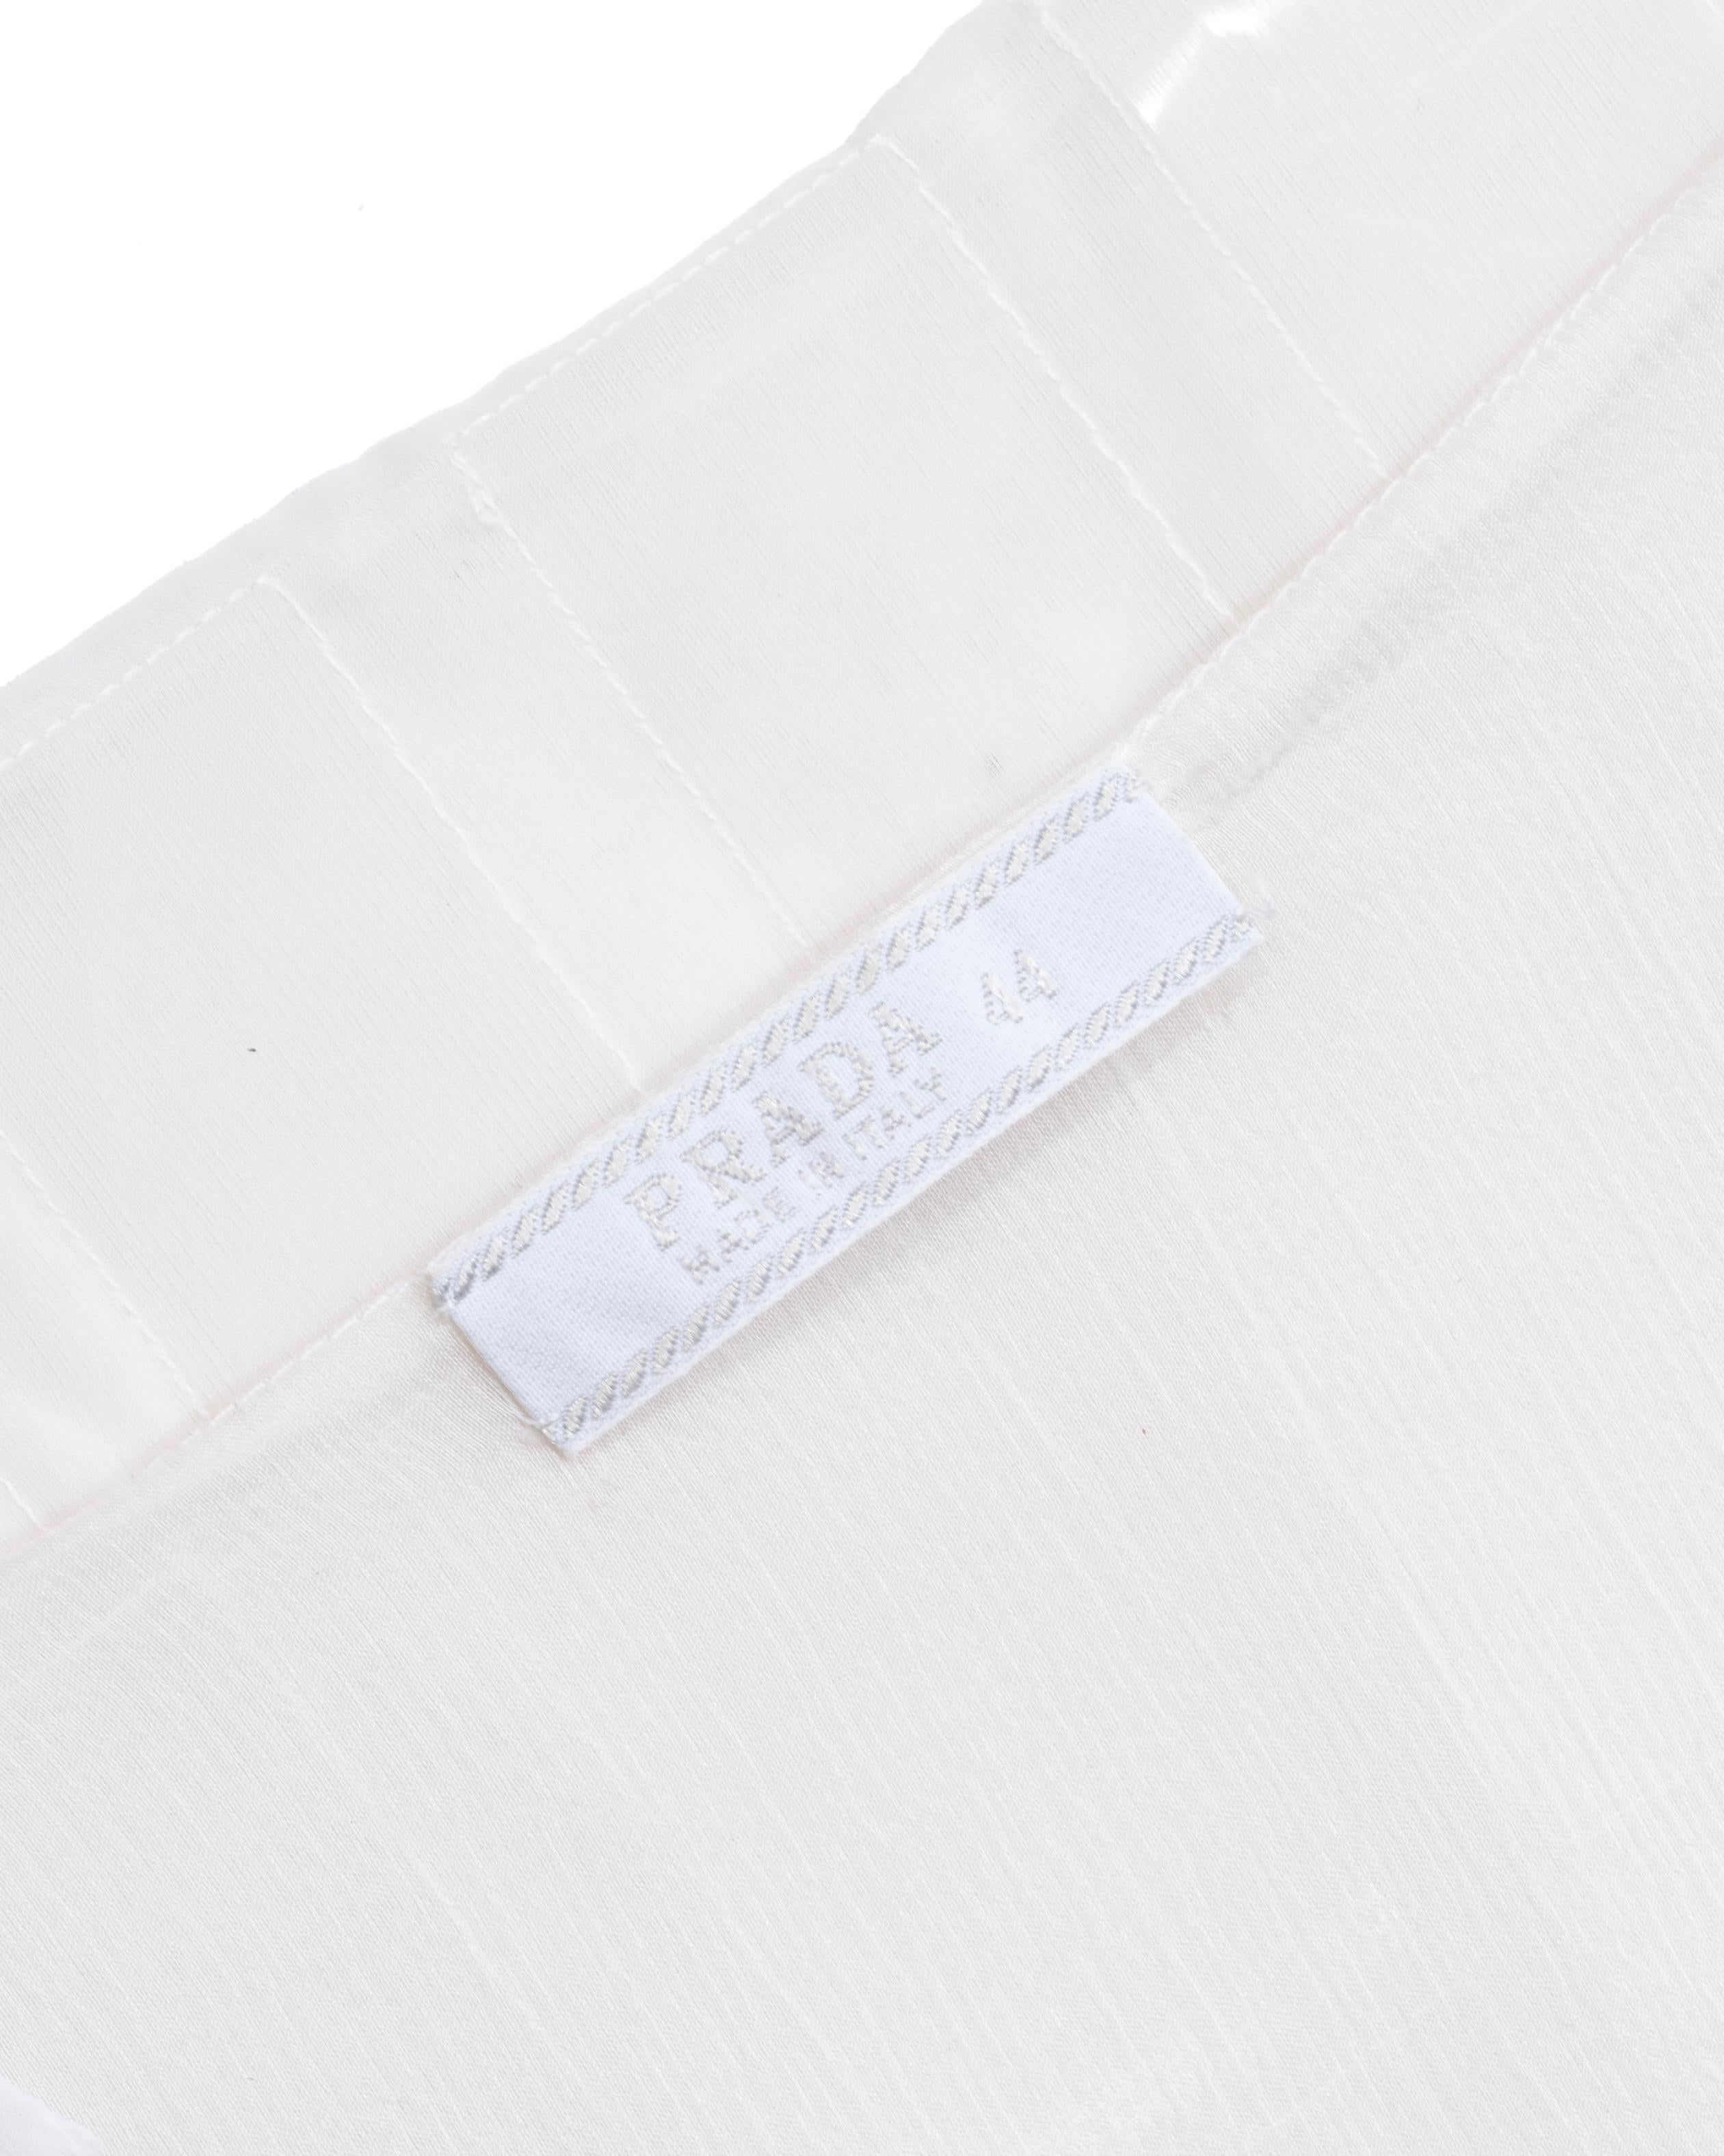 Prada by Miuccia Prada White Silk and Plastic Tile Camisole Top, fw 1998 For Sale 9